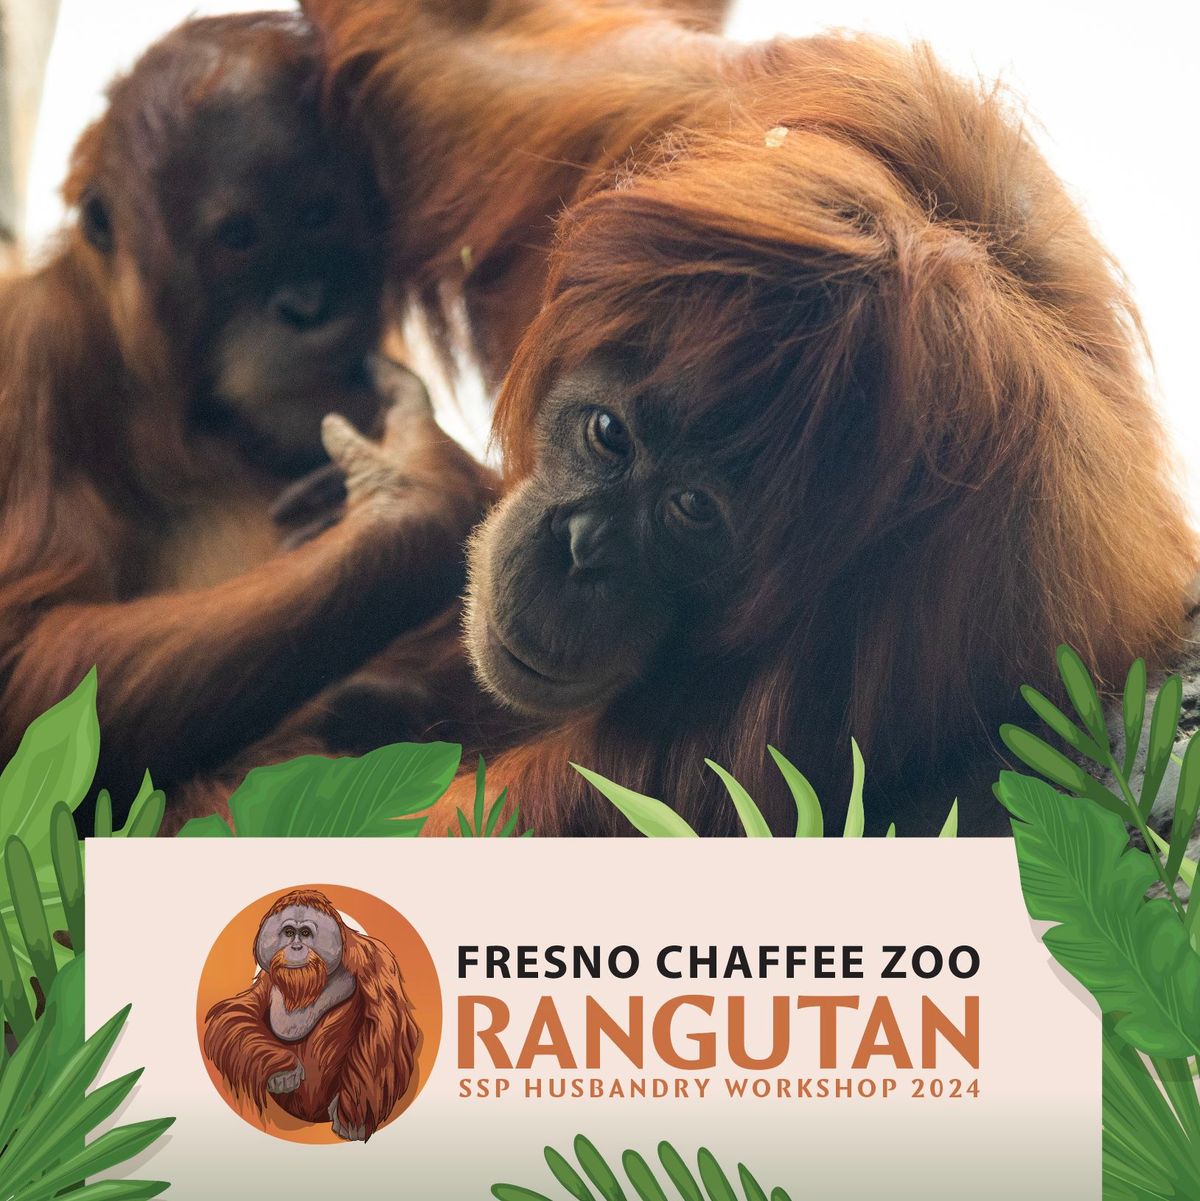 Orangutan SSP Husbandry Workshop 2024